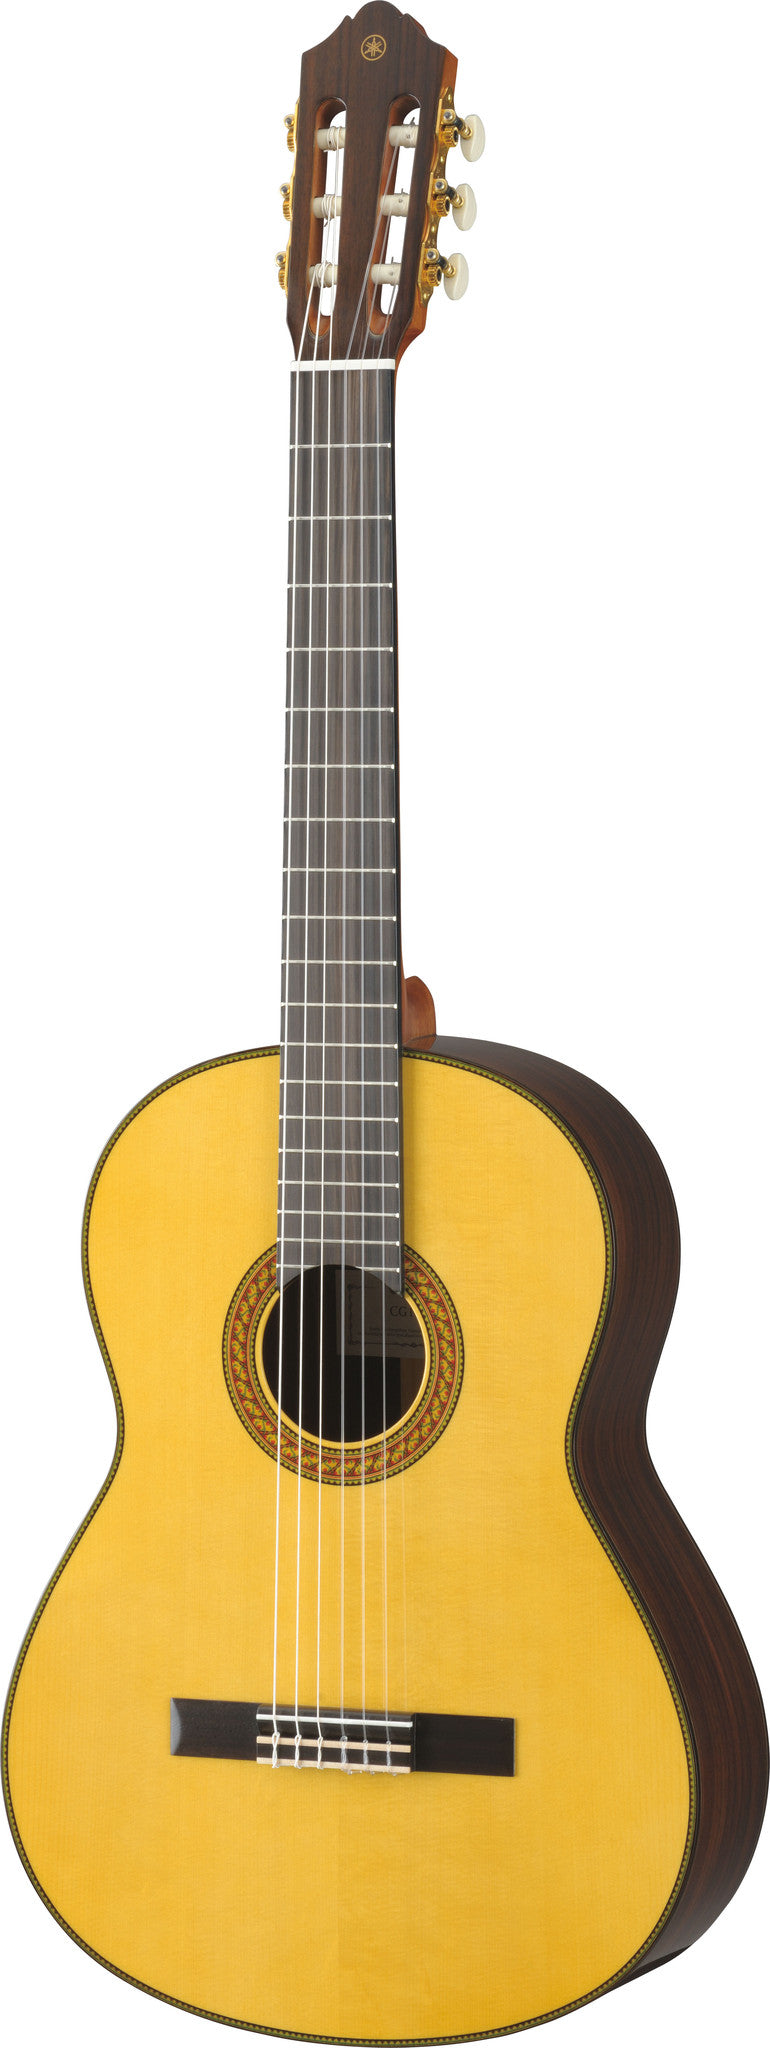 Yamaha CG192S Solid European Classical Guitar